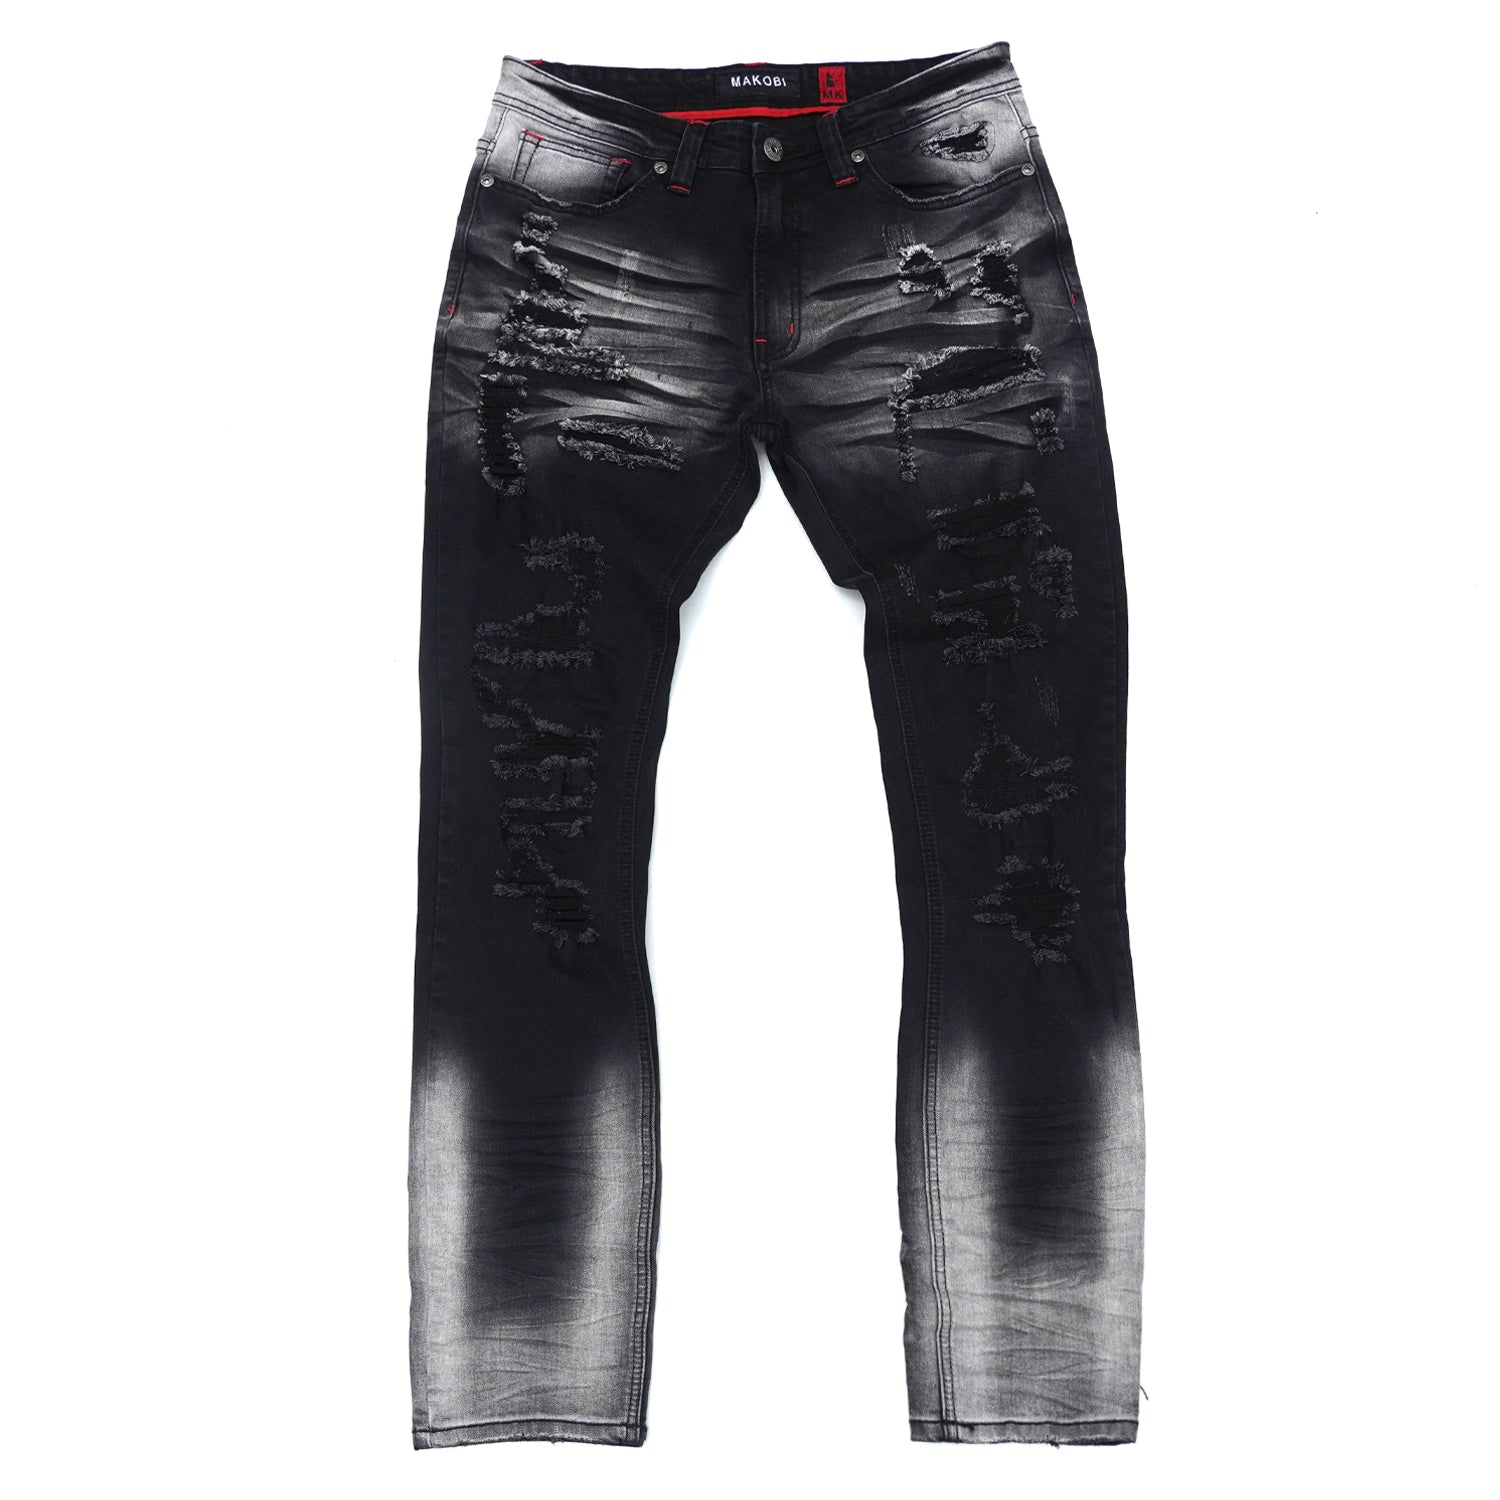 M1928 All Over Shredded Jeans - Black Wash